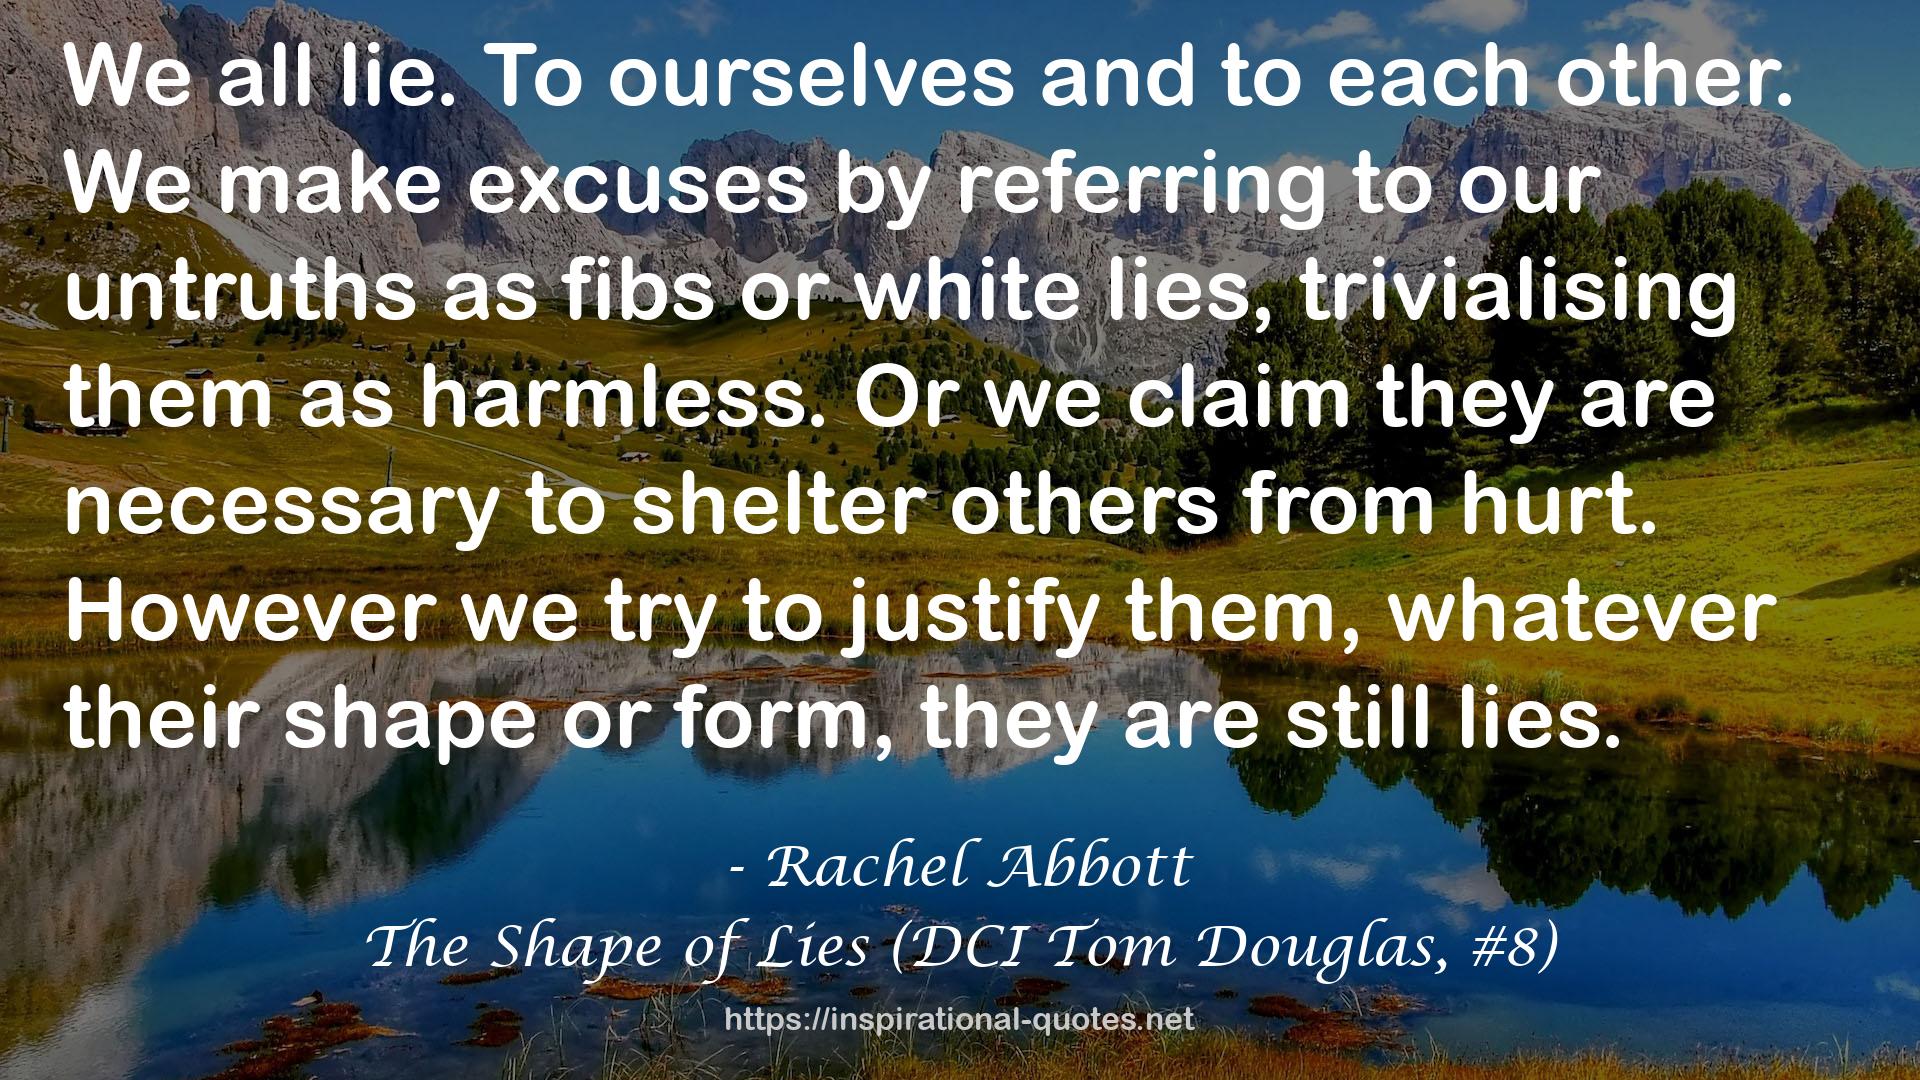 The Shape of Lies (DCI Tom Douglas, #8) QUOTES